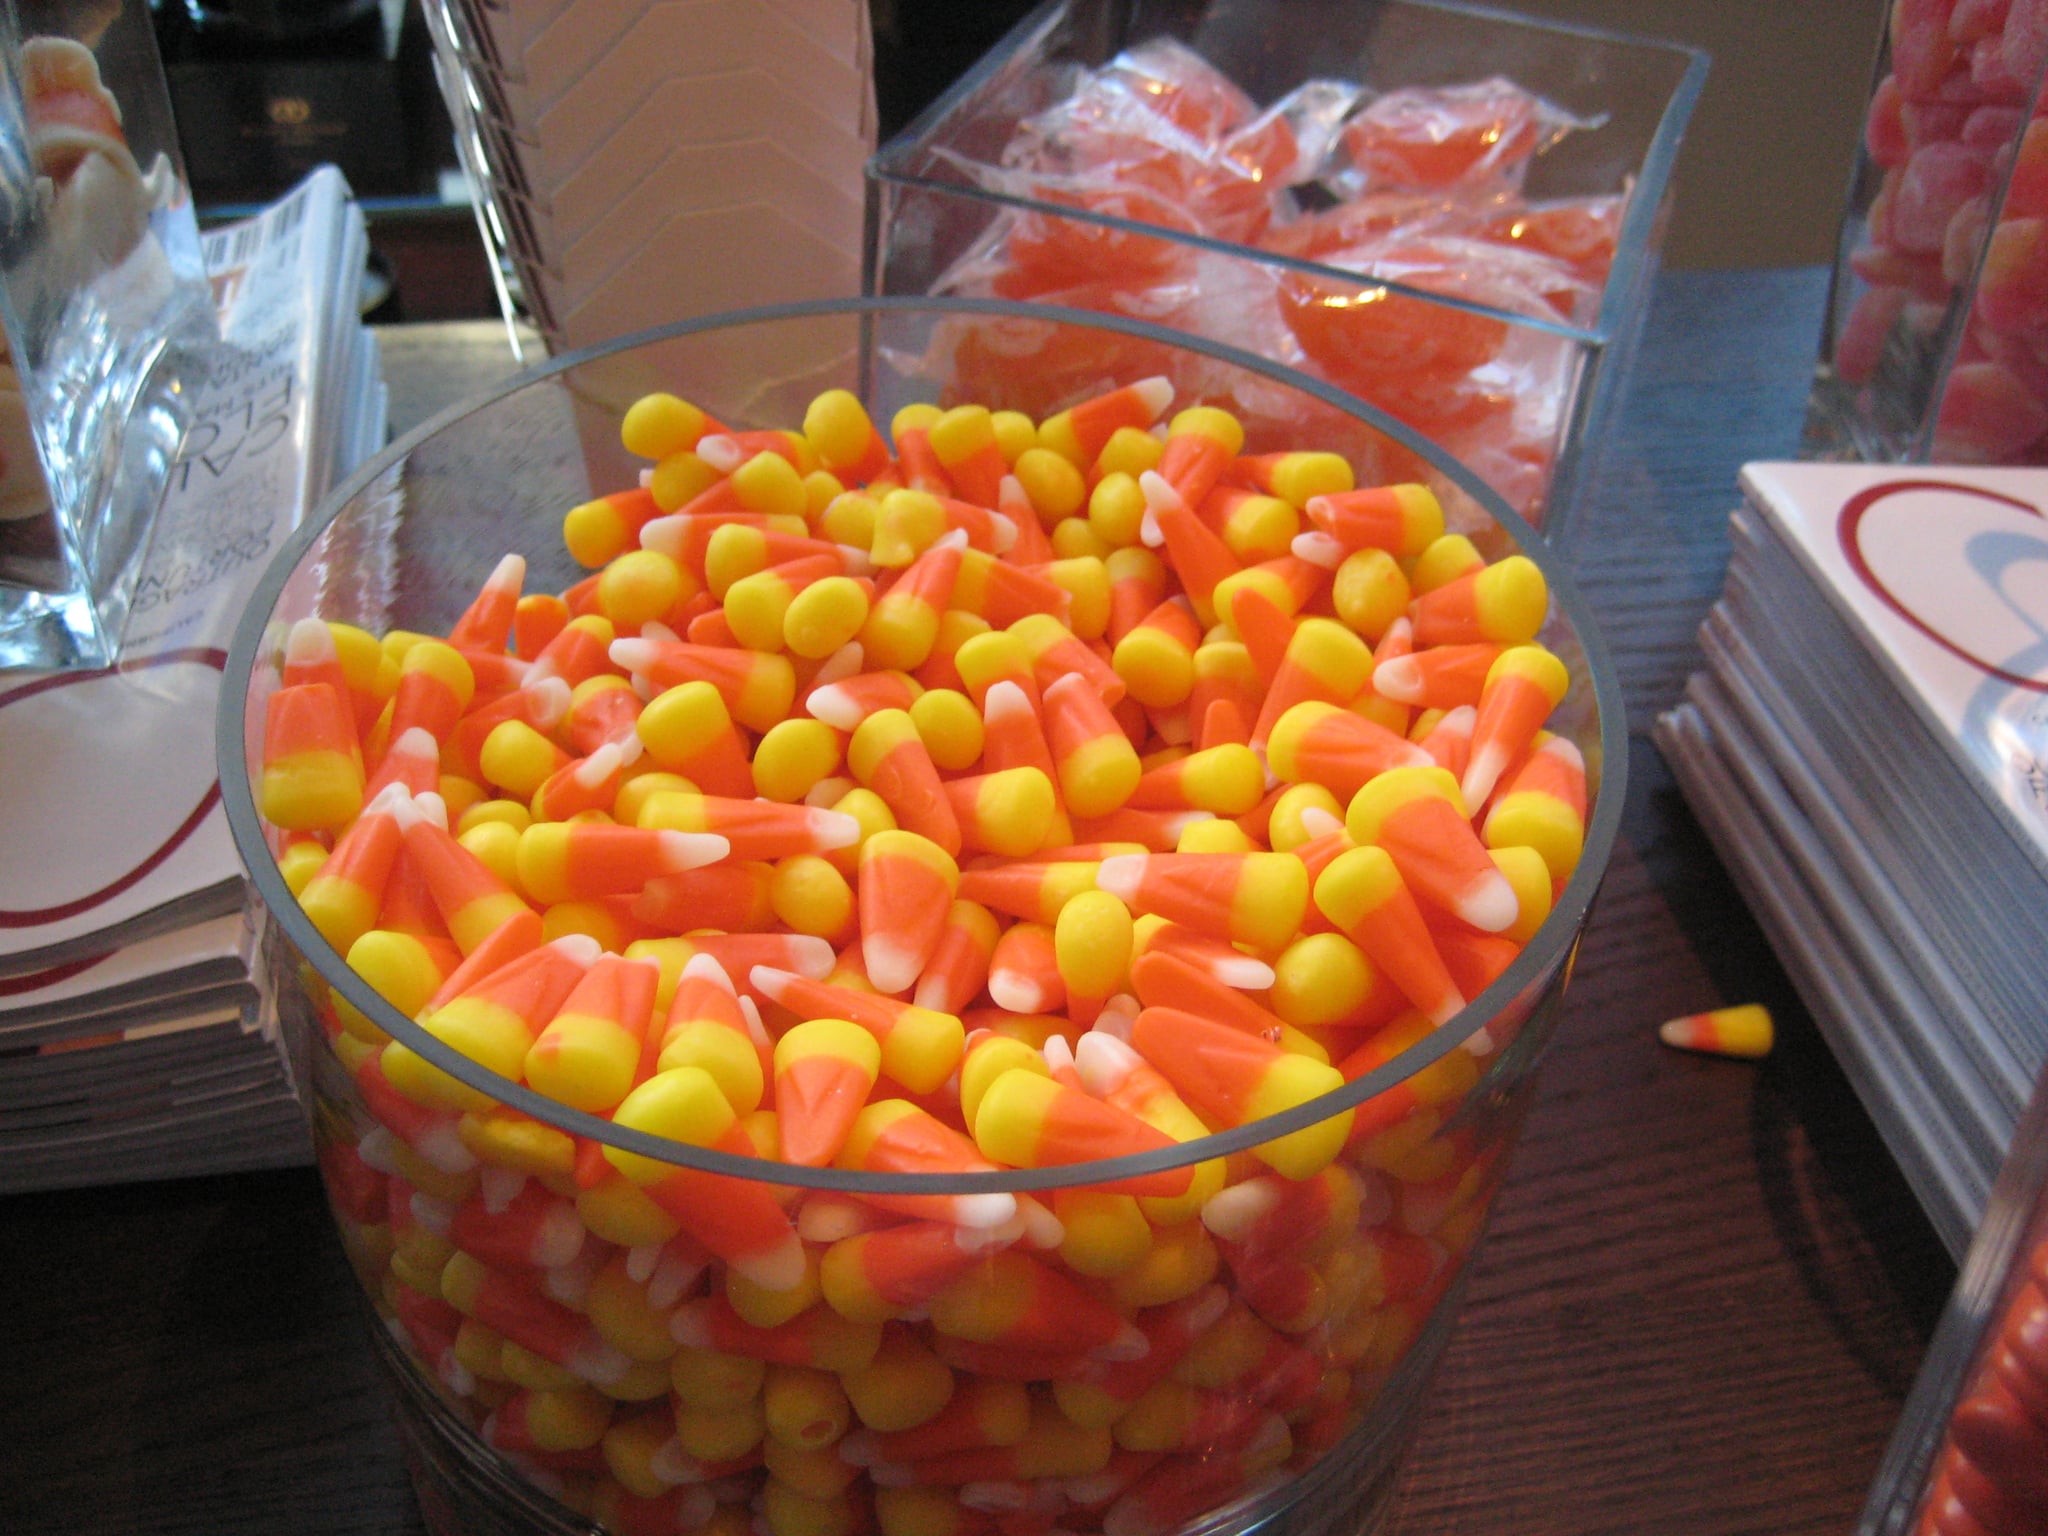 Fabulous Favor Idea: Color Coded Candy